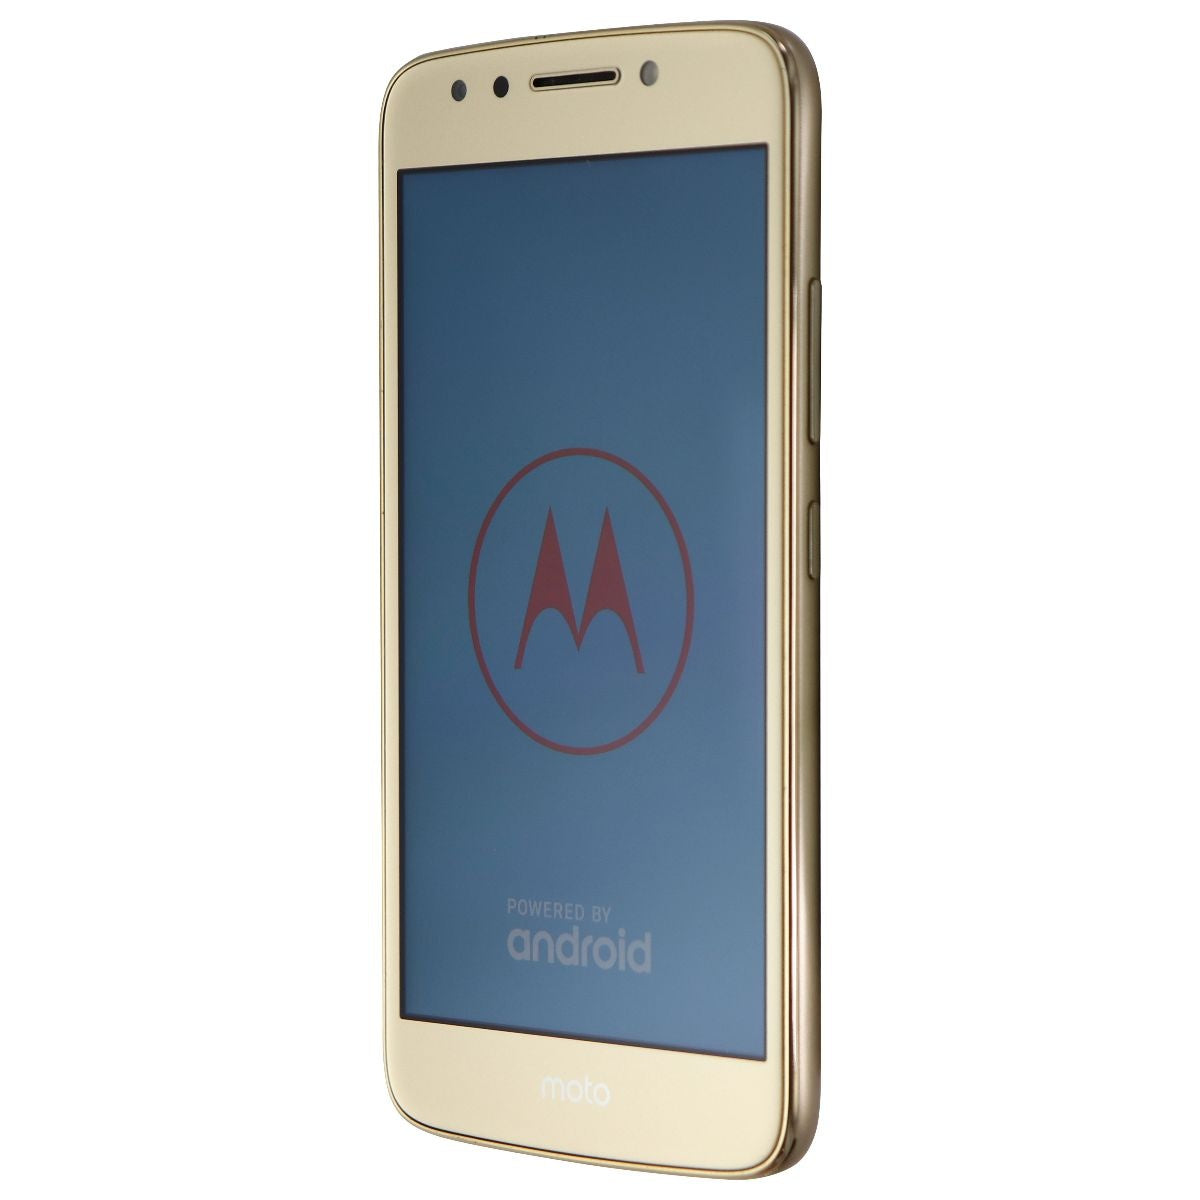 Motorola Moto E4 (5.0-inch) Smartphone (XT1765) Metro PCS Only - 16GB/Gold Cell Phones & Smartphones Motorola    - Simple Cell Bulk Wholesale Pricing - USA Seller